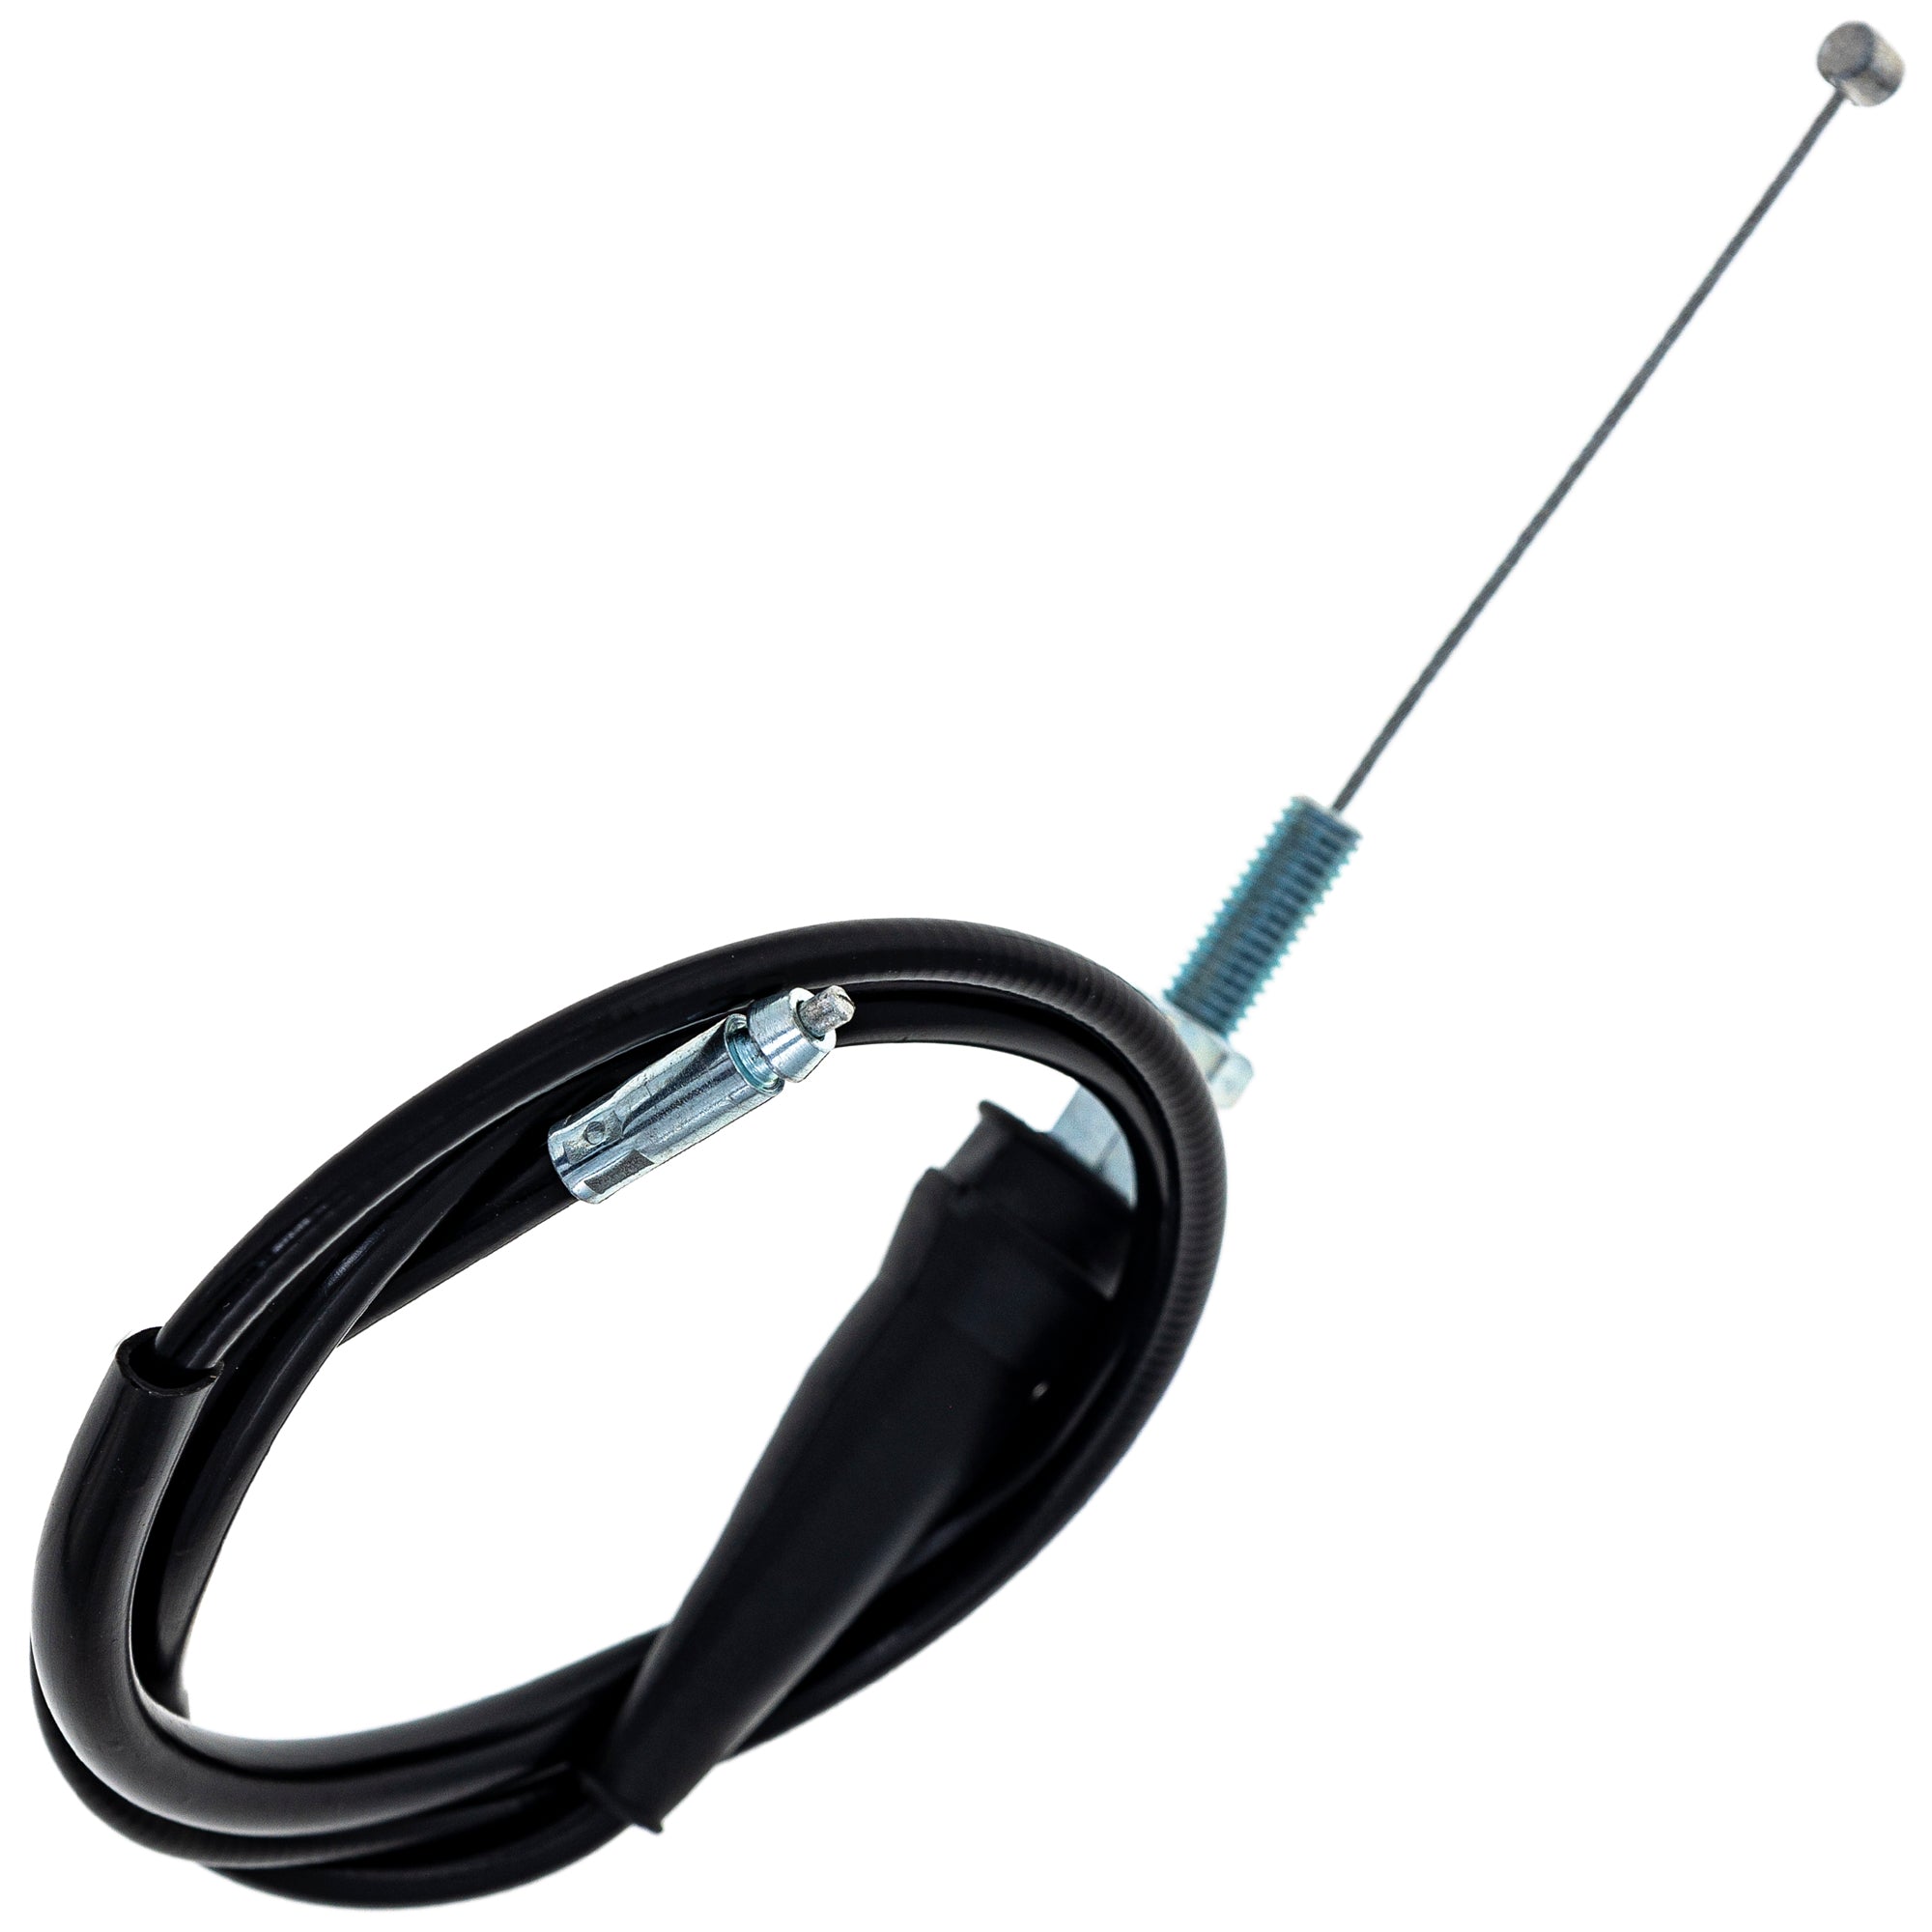 Throttle Cable for Kawasaki Bayou 220 250 54012-1329 54012-1361